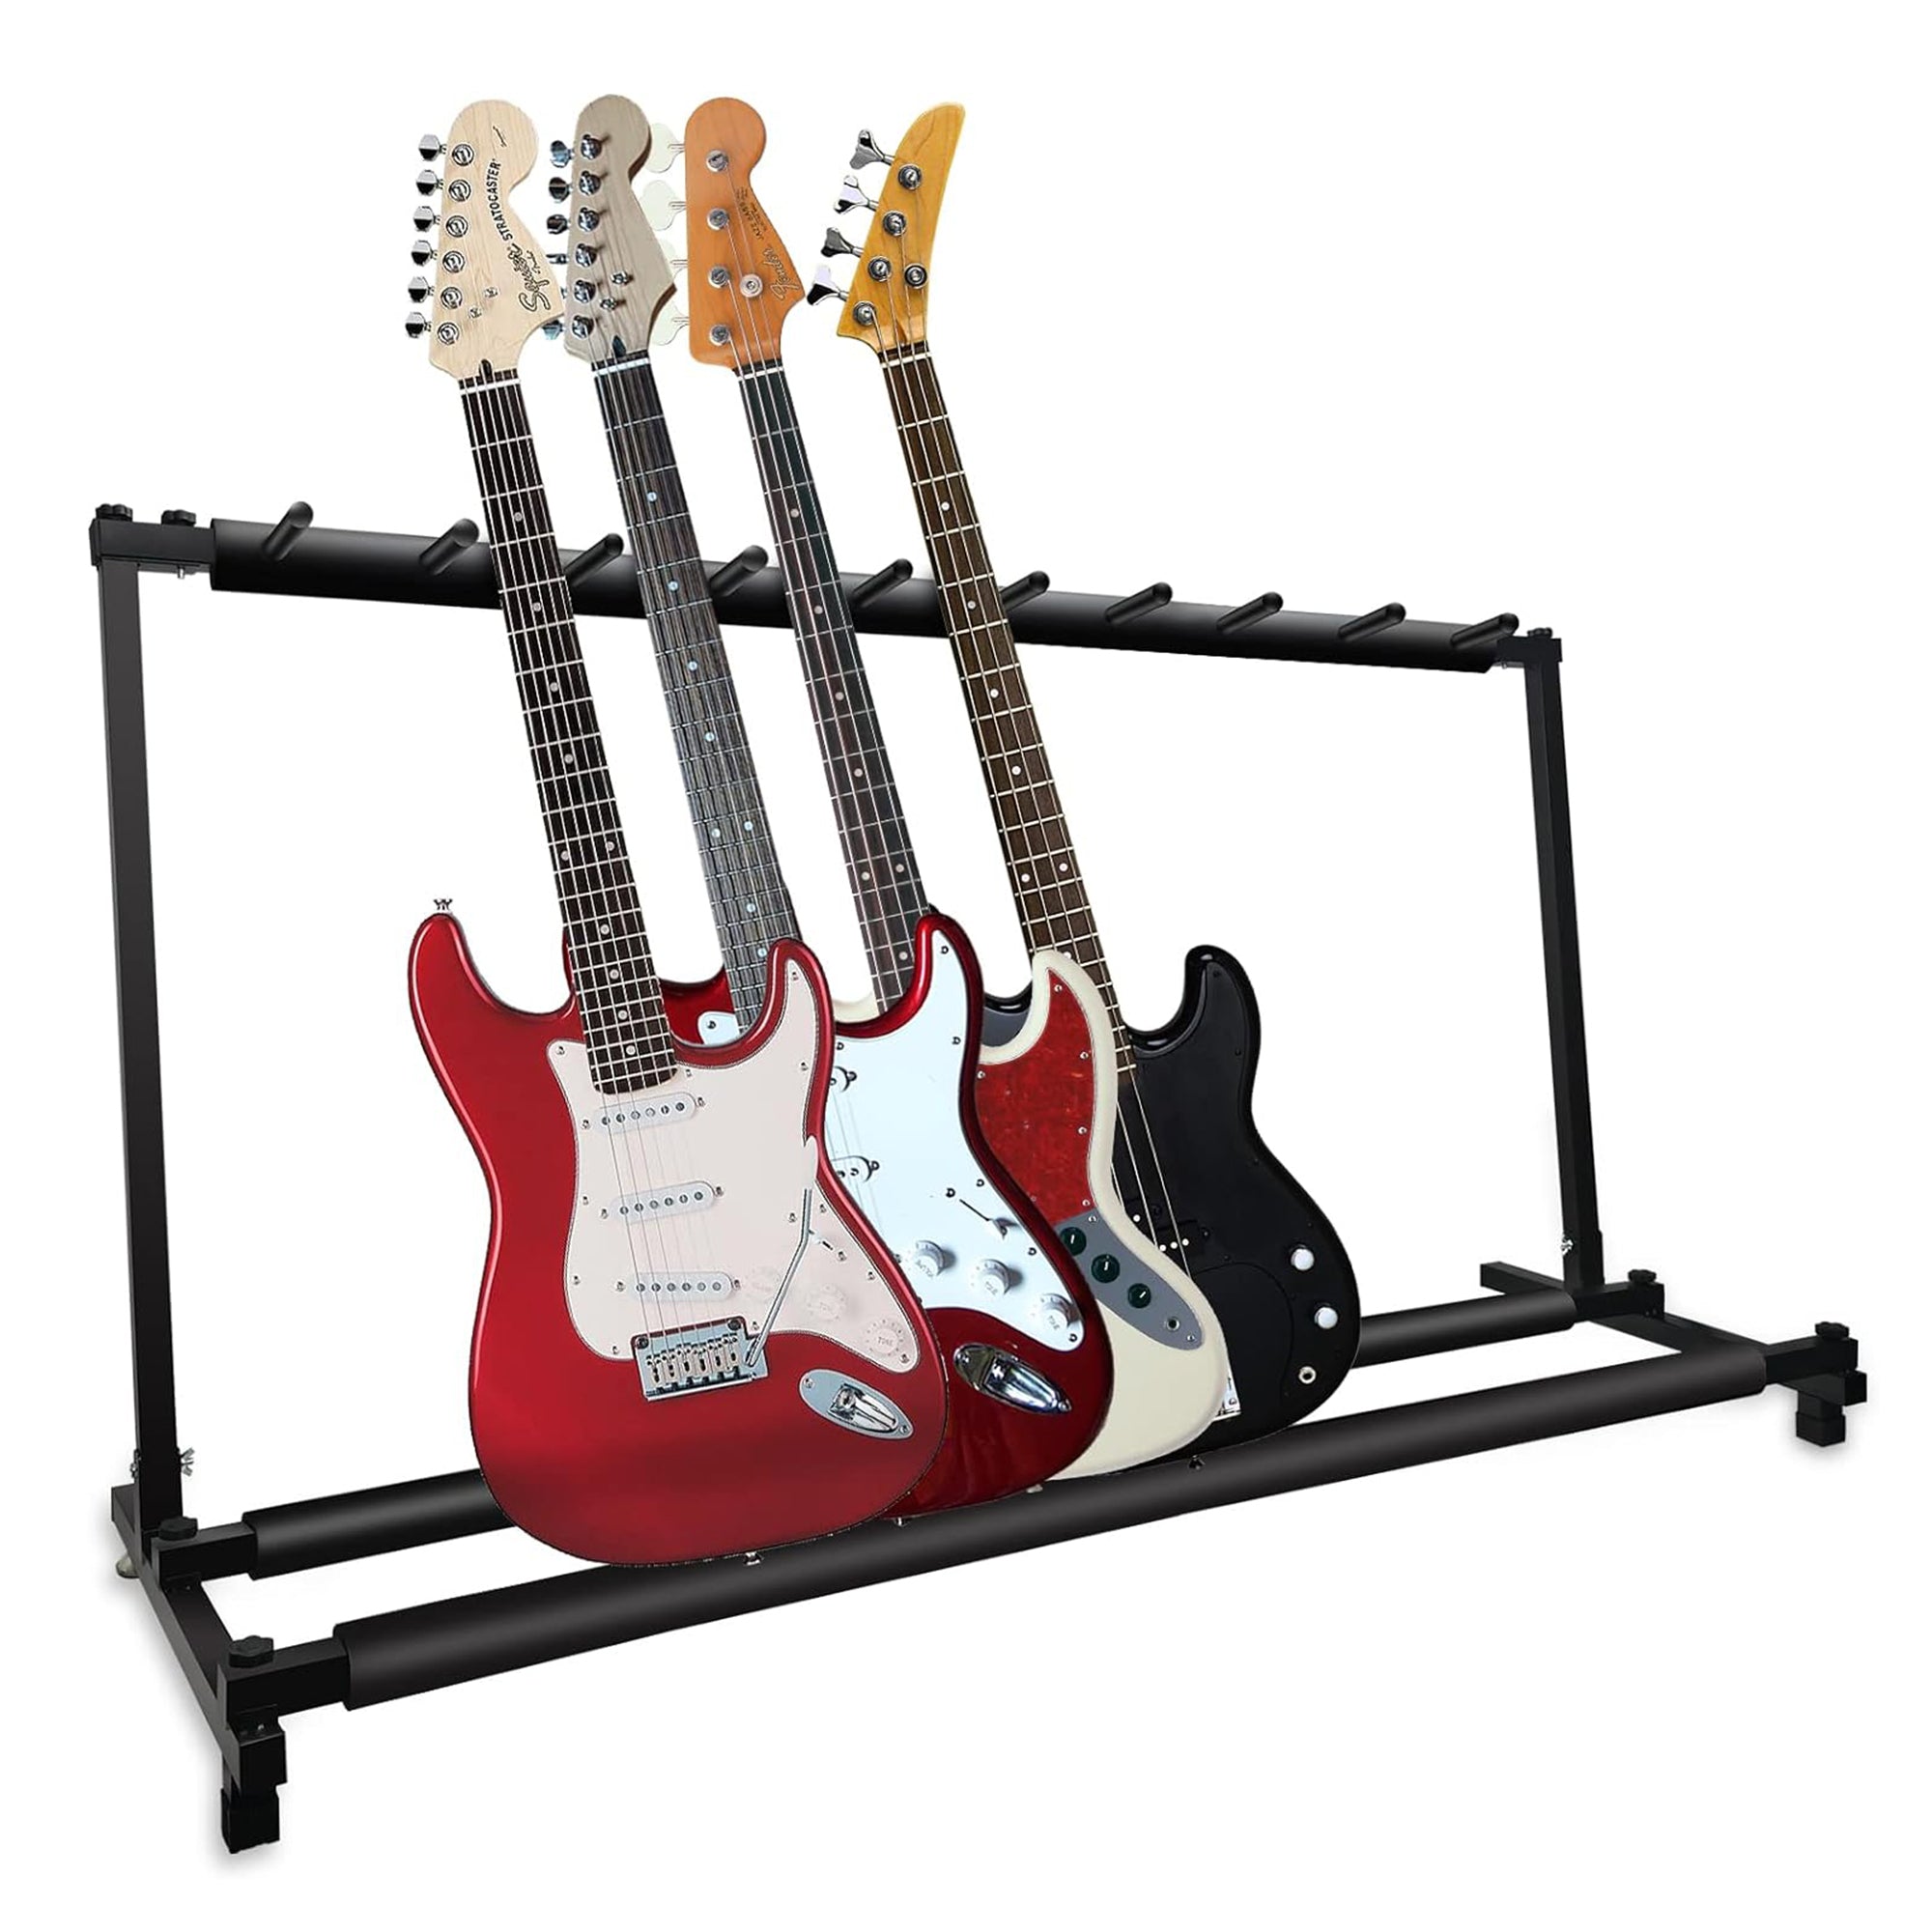 5 Core Guitar Stand Metal Guitar Floor Rack For Multiple Guitars 9 Guitar Stand Folding Design